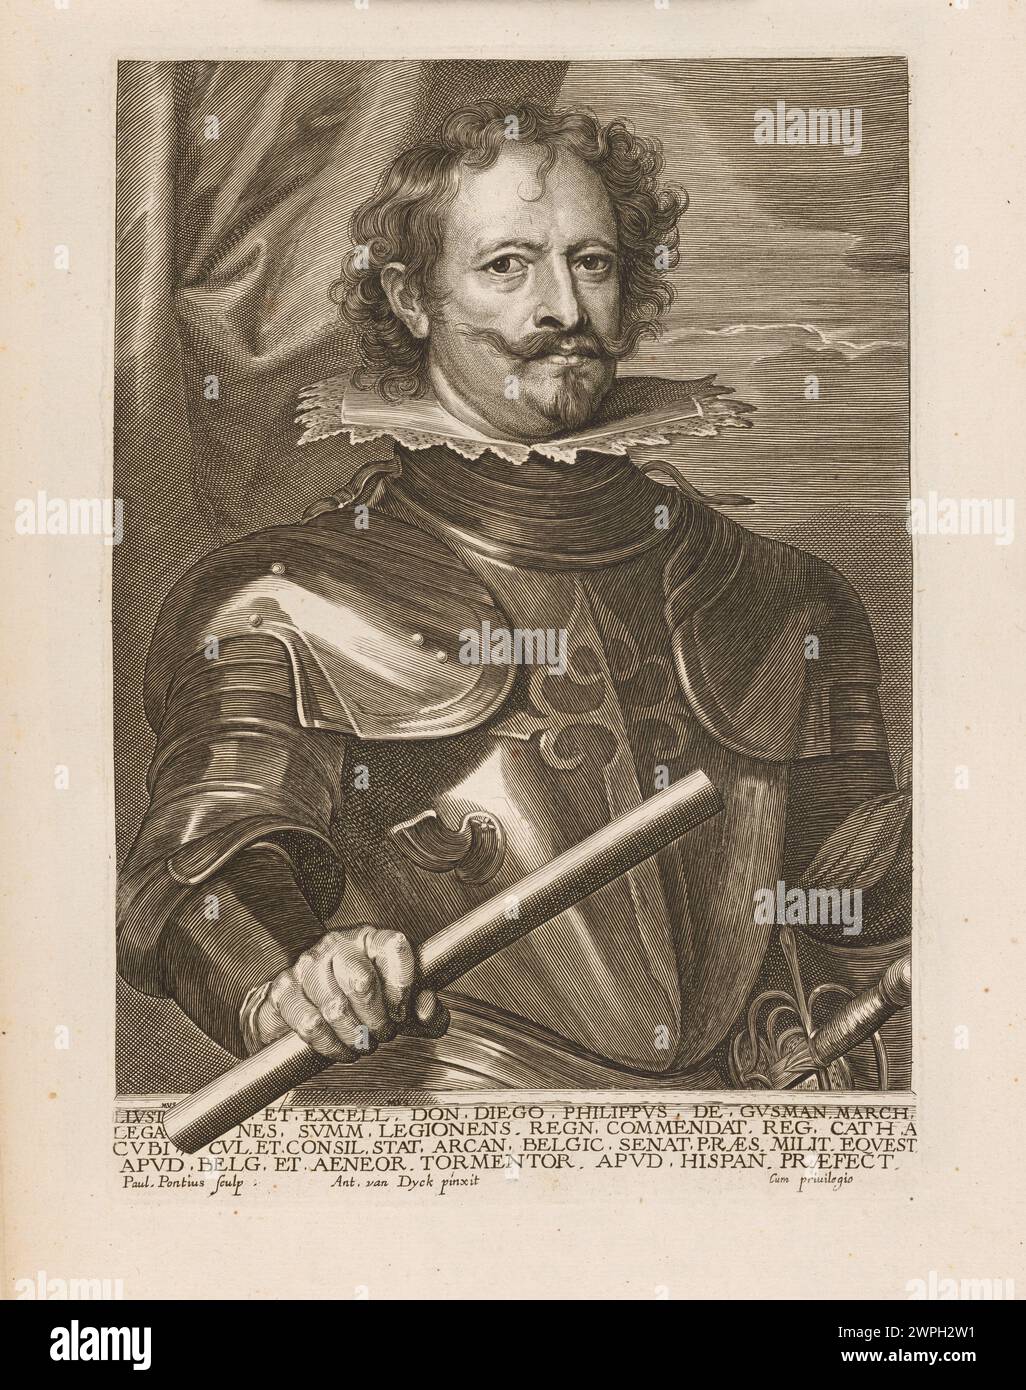 Diego Felipe de Guzman Leganes; Pontius, Paulus (1603-1658), Dyck, Anthony Van (1599-1641), Hendricx, Gillis (fl. 1645-); 1645-1646 (1645-00-00-1645-00-00); Stock Photo